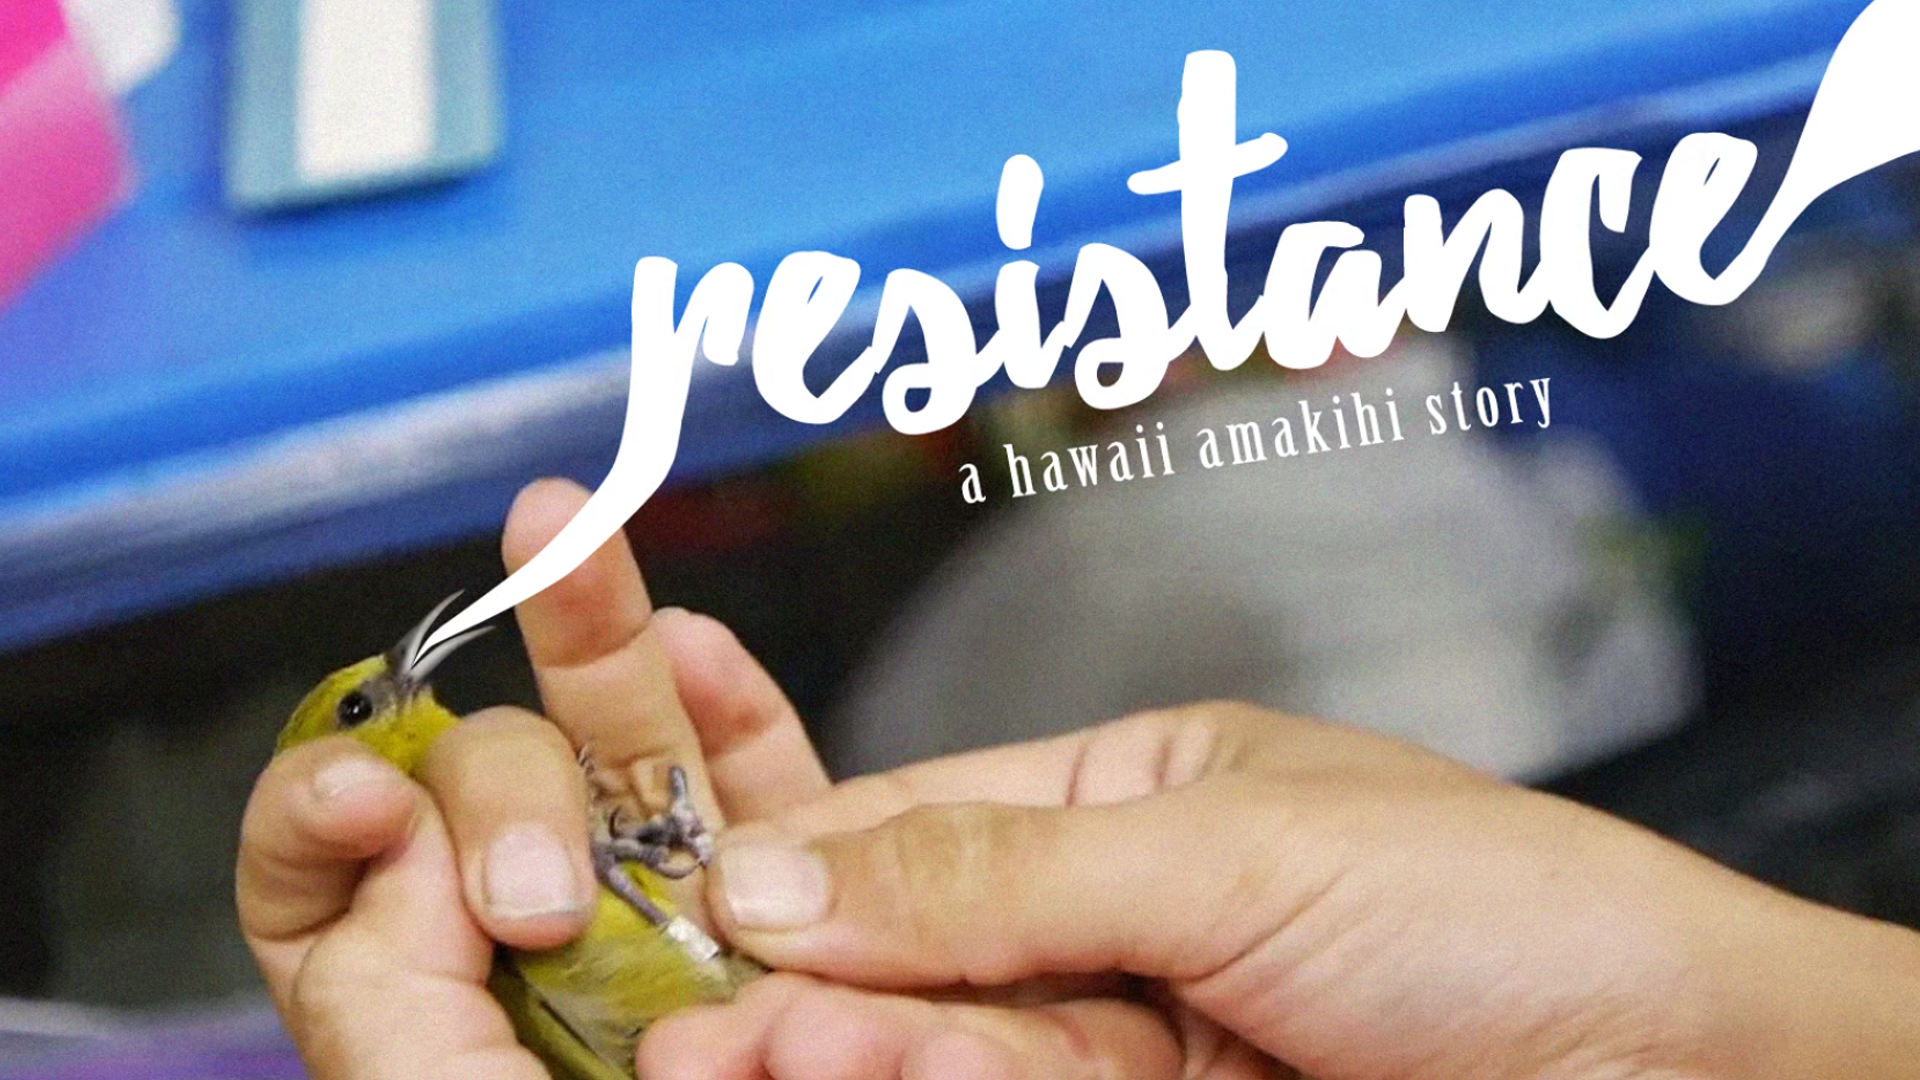 Stone Watson - Resistance A Hawaii Amakihi Story - Mini Documentary